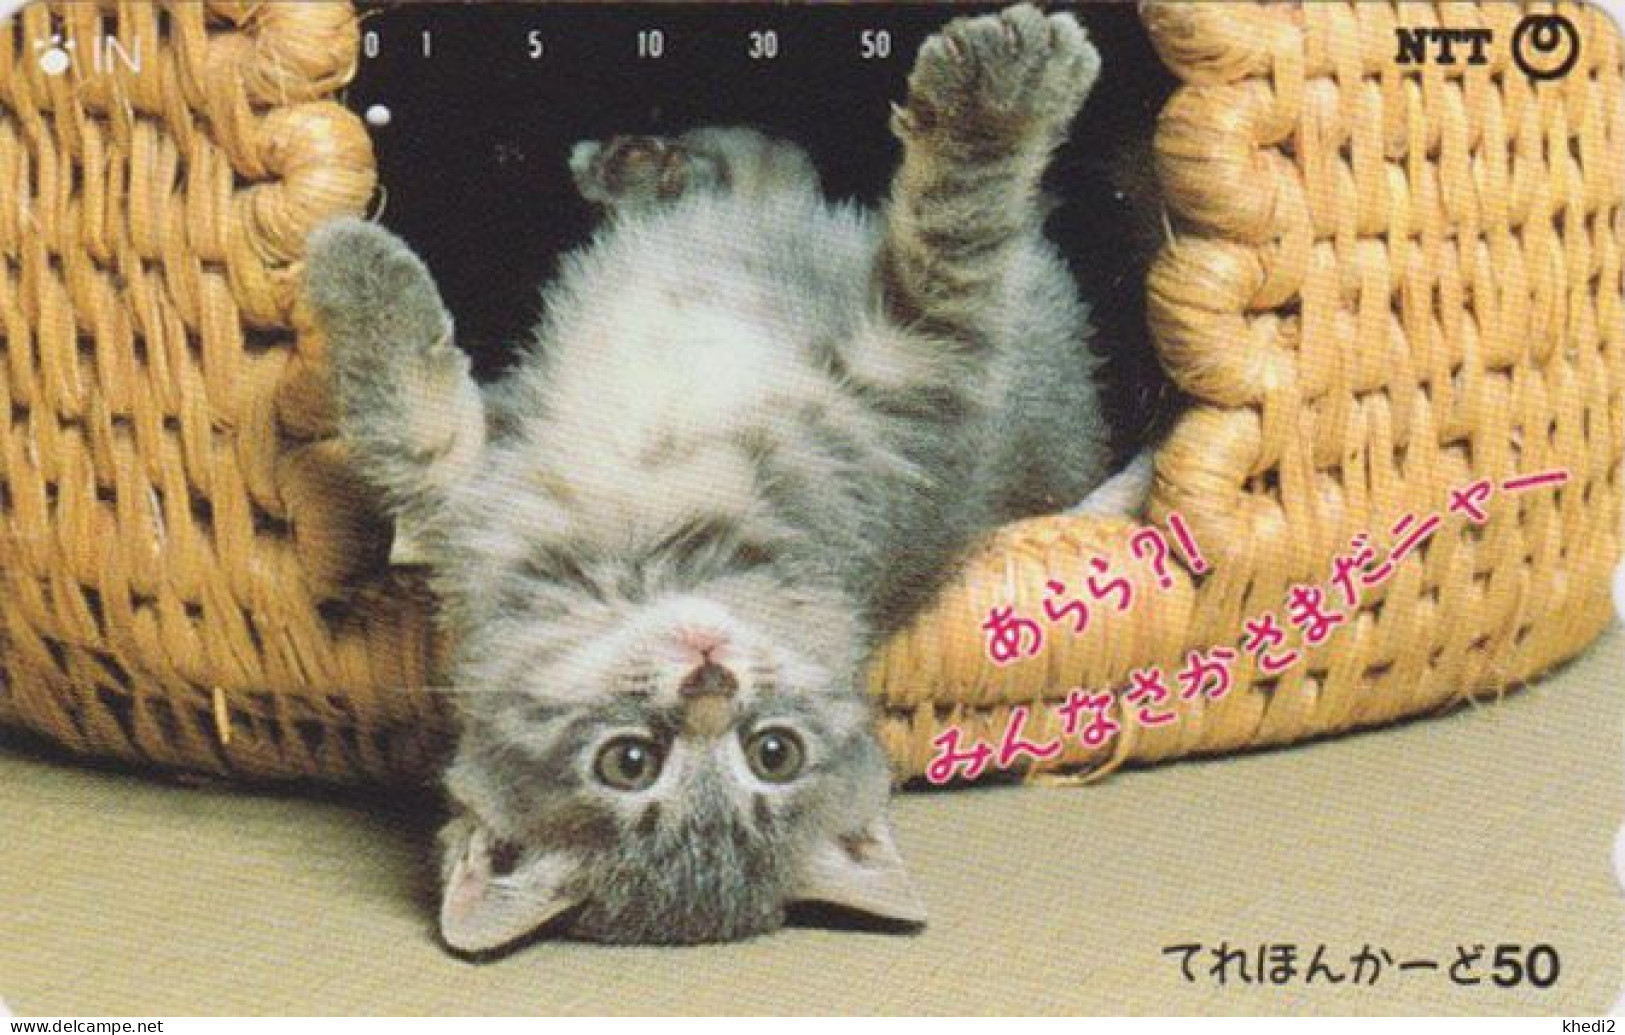 Télécarte JAPON / NTT 251-001 B ** 2 NOTCHES 1 PUNCH ** - ANIMAL CHAT - CAT JAPAN Phonecard - Gatti